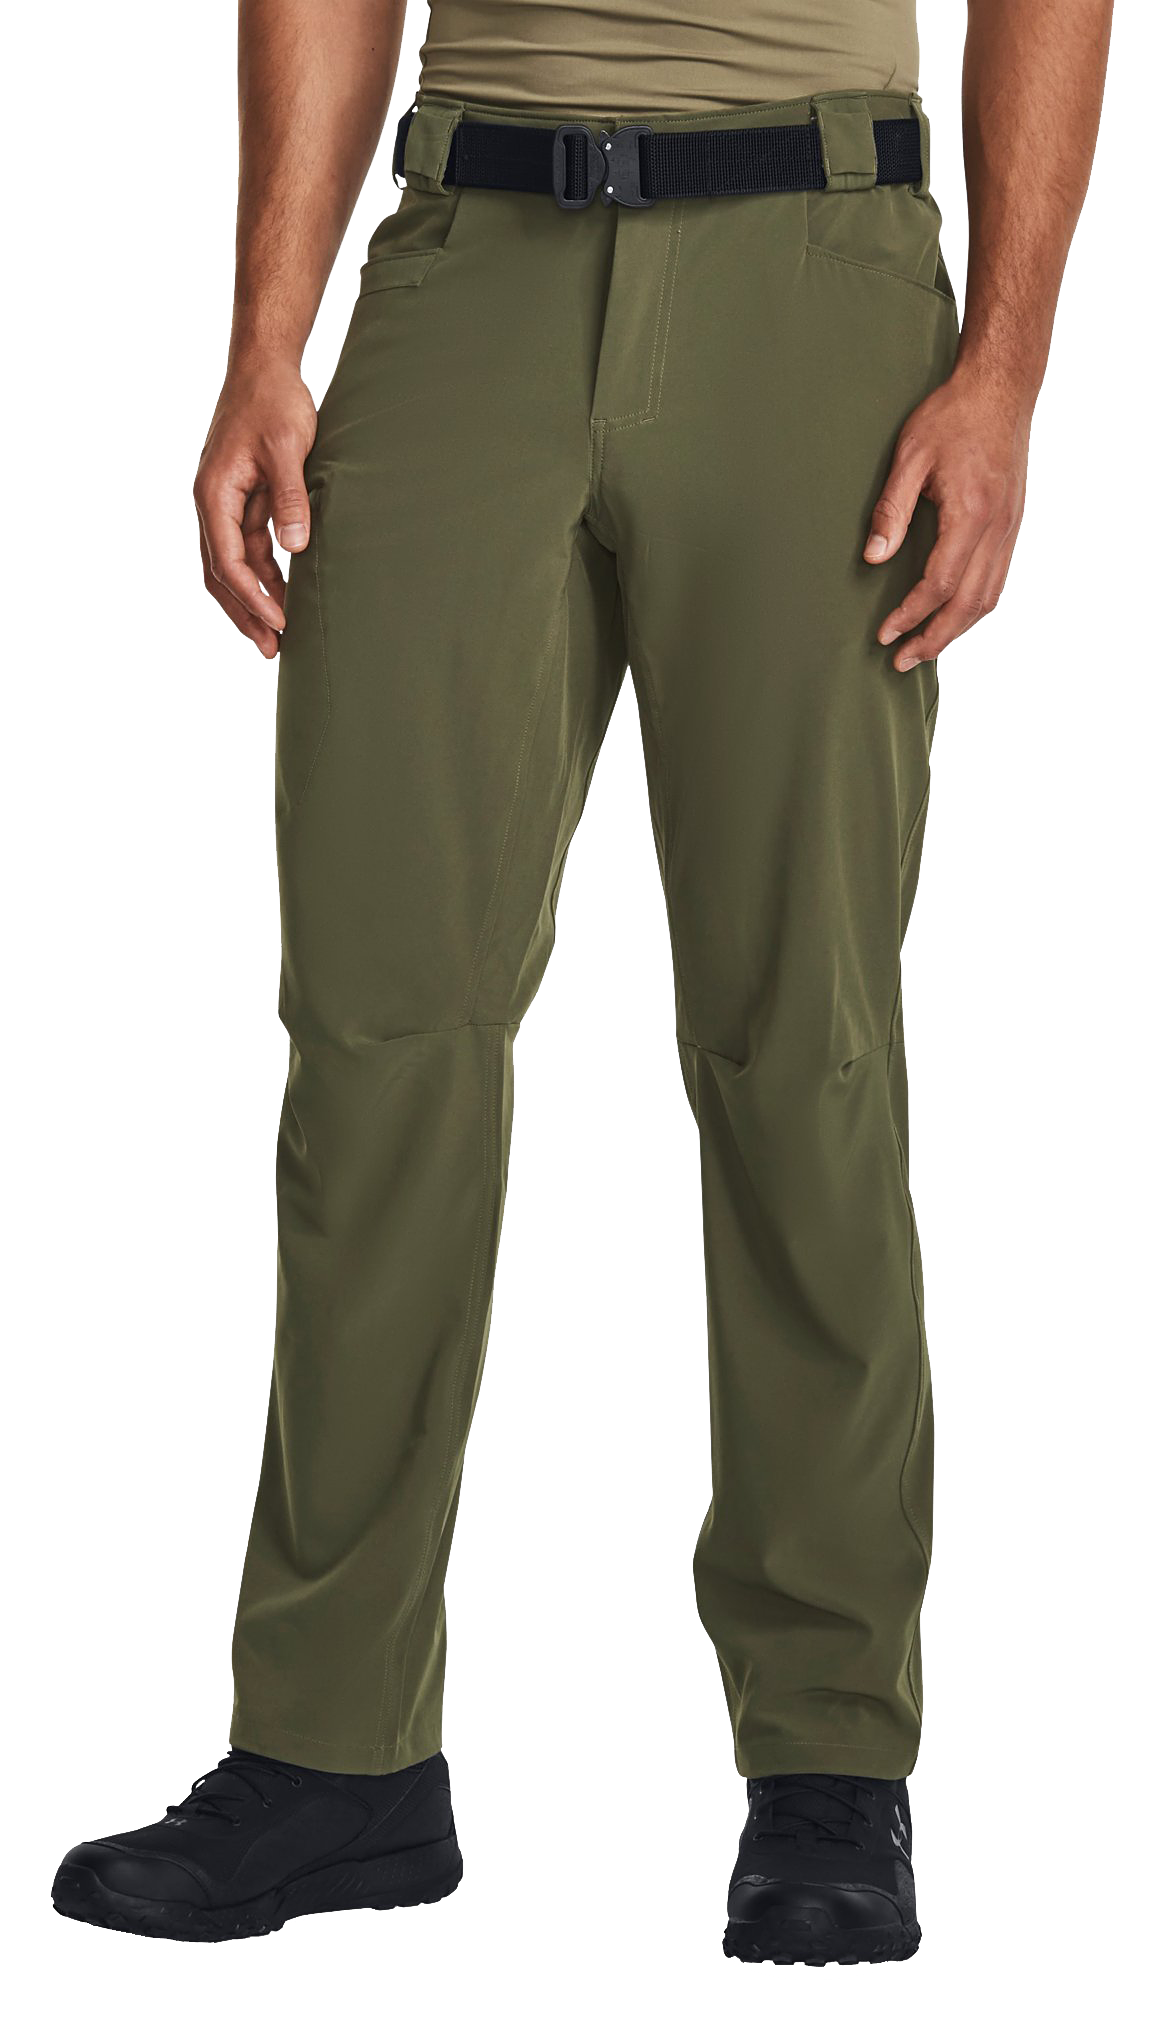 Under Armour Enduro Loose Fit Pants Men’s 38 x 30 Marine Khaki Tactical